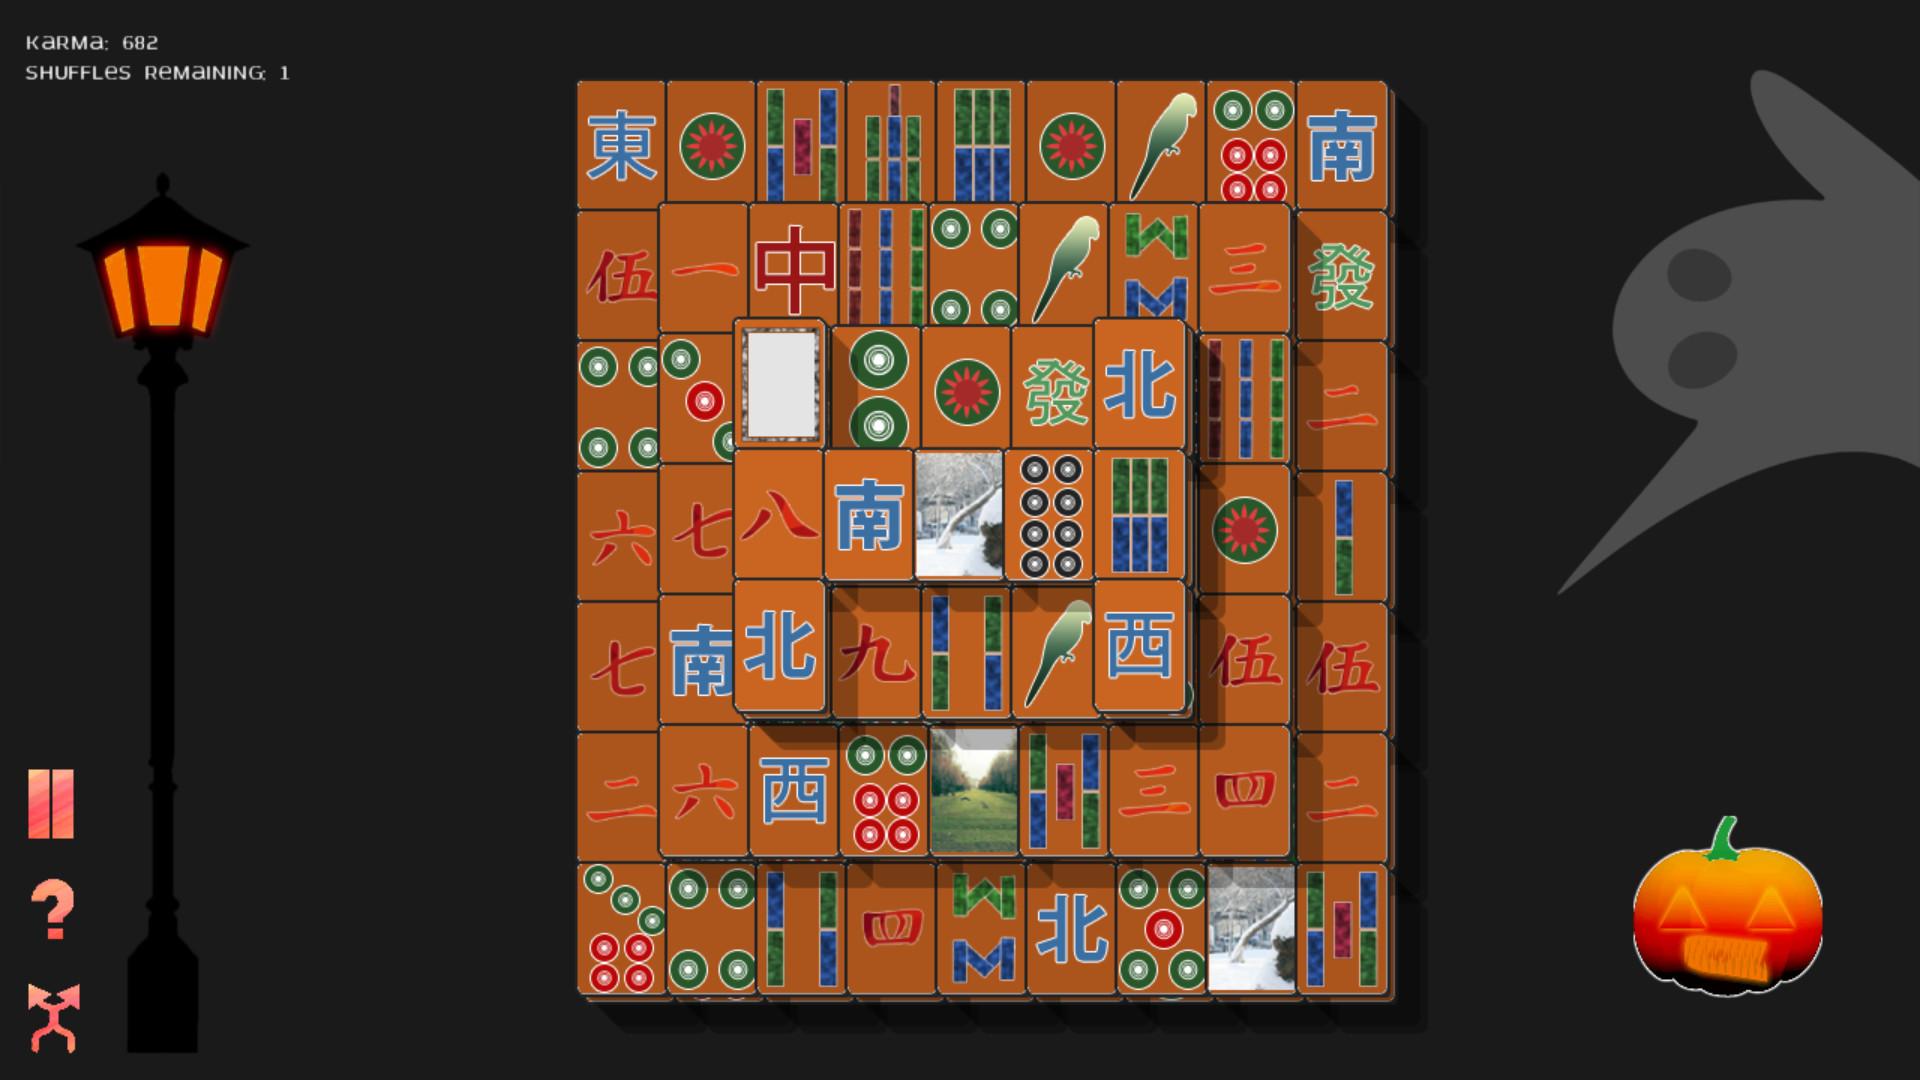 Screenshot №1 from game That's Mahjong!